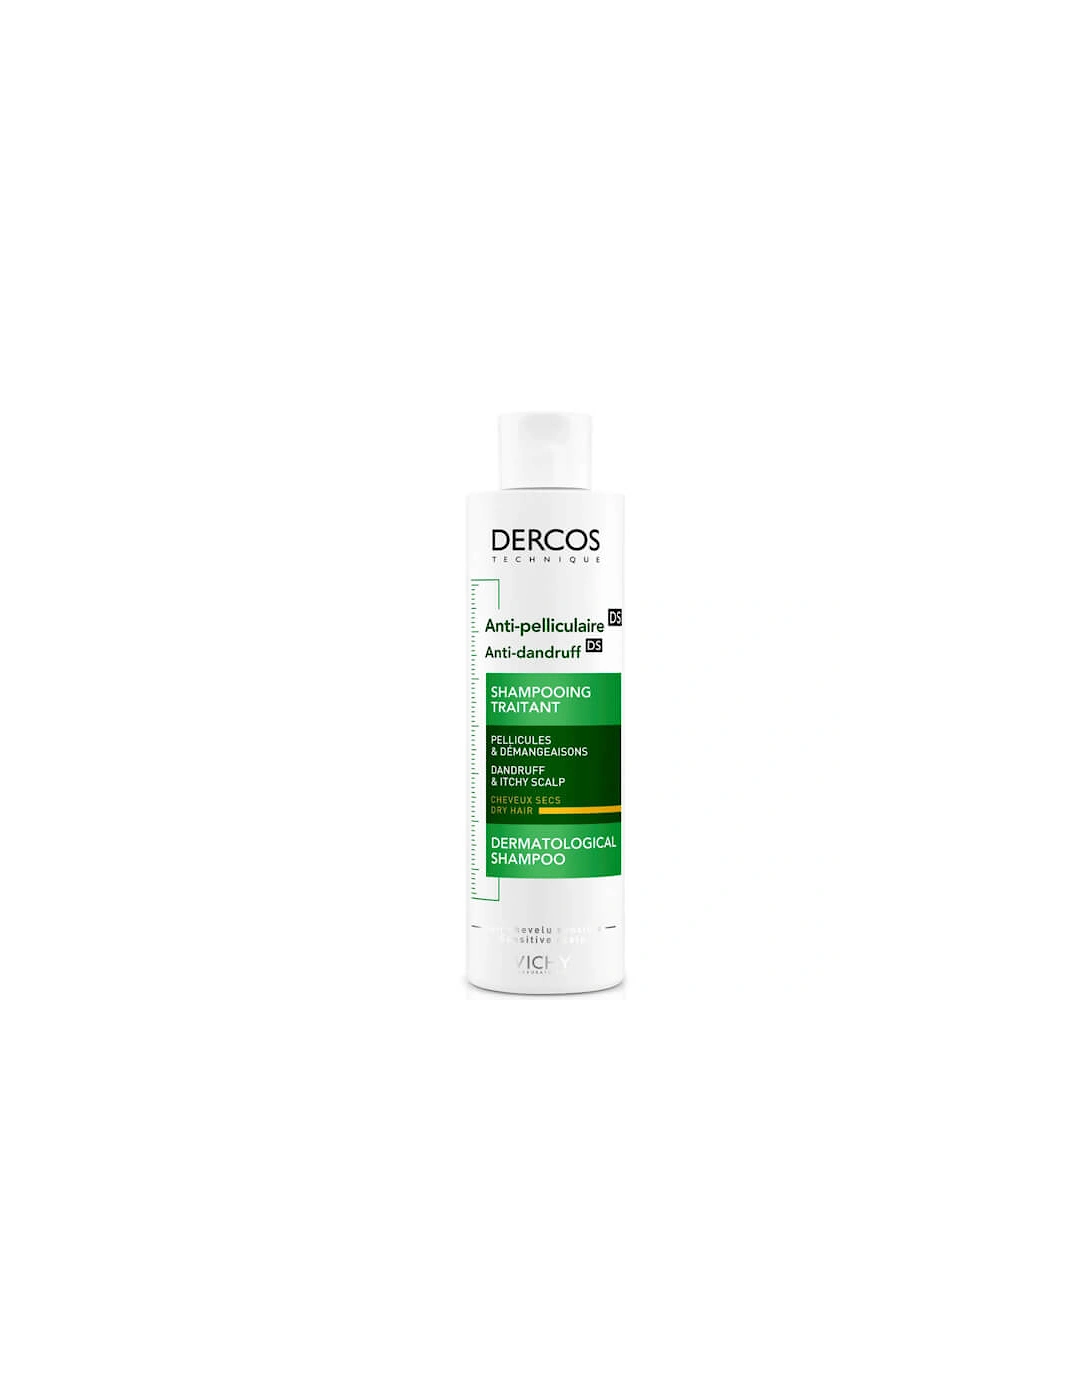 Dercos Anti-Dandruff - Dry Hair Shampoo 200ml - - Dercos Anti-Dandruff - Dry Hair Shampoo 200ml - Kenneth, 2 of 1